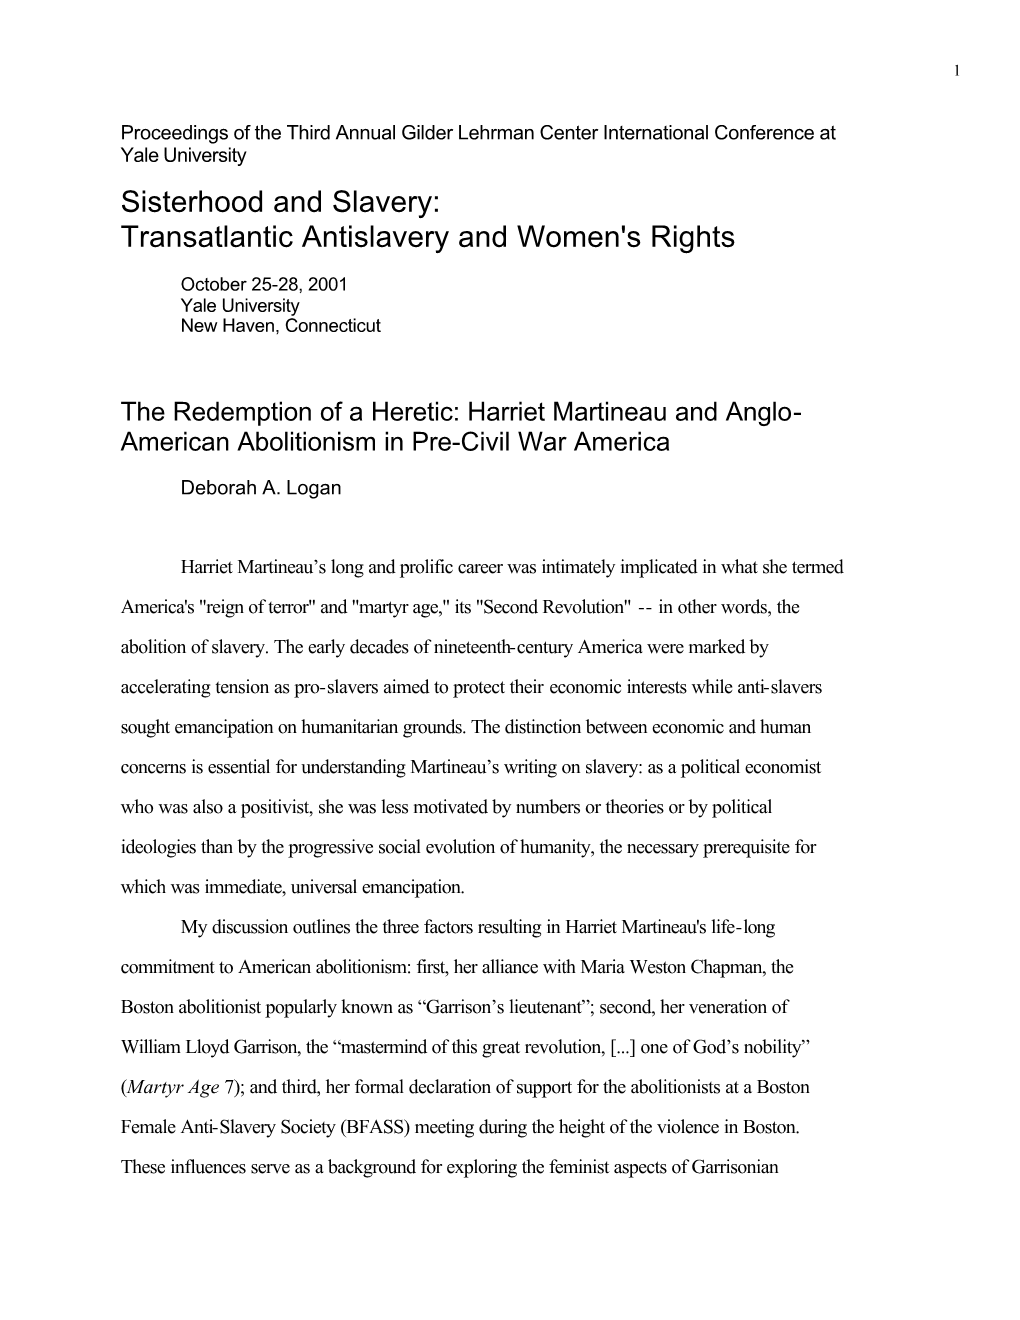 Sisterhood and Slavery: Transatlantic Antislavery and Women's Rights